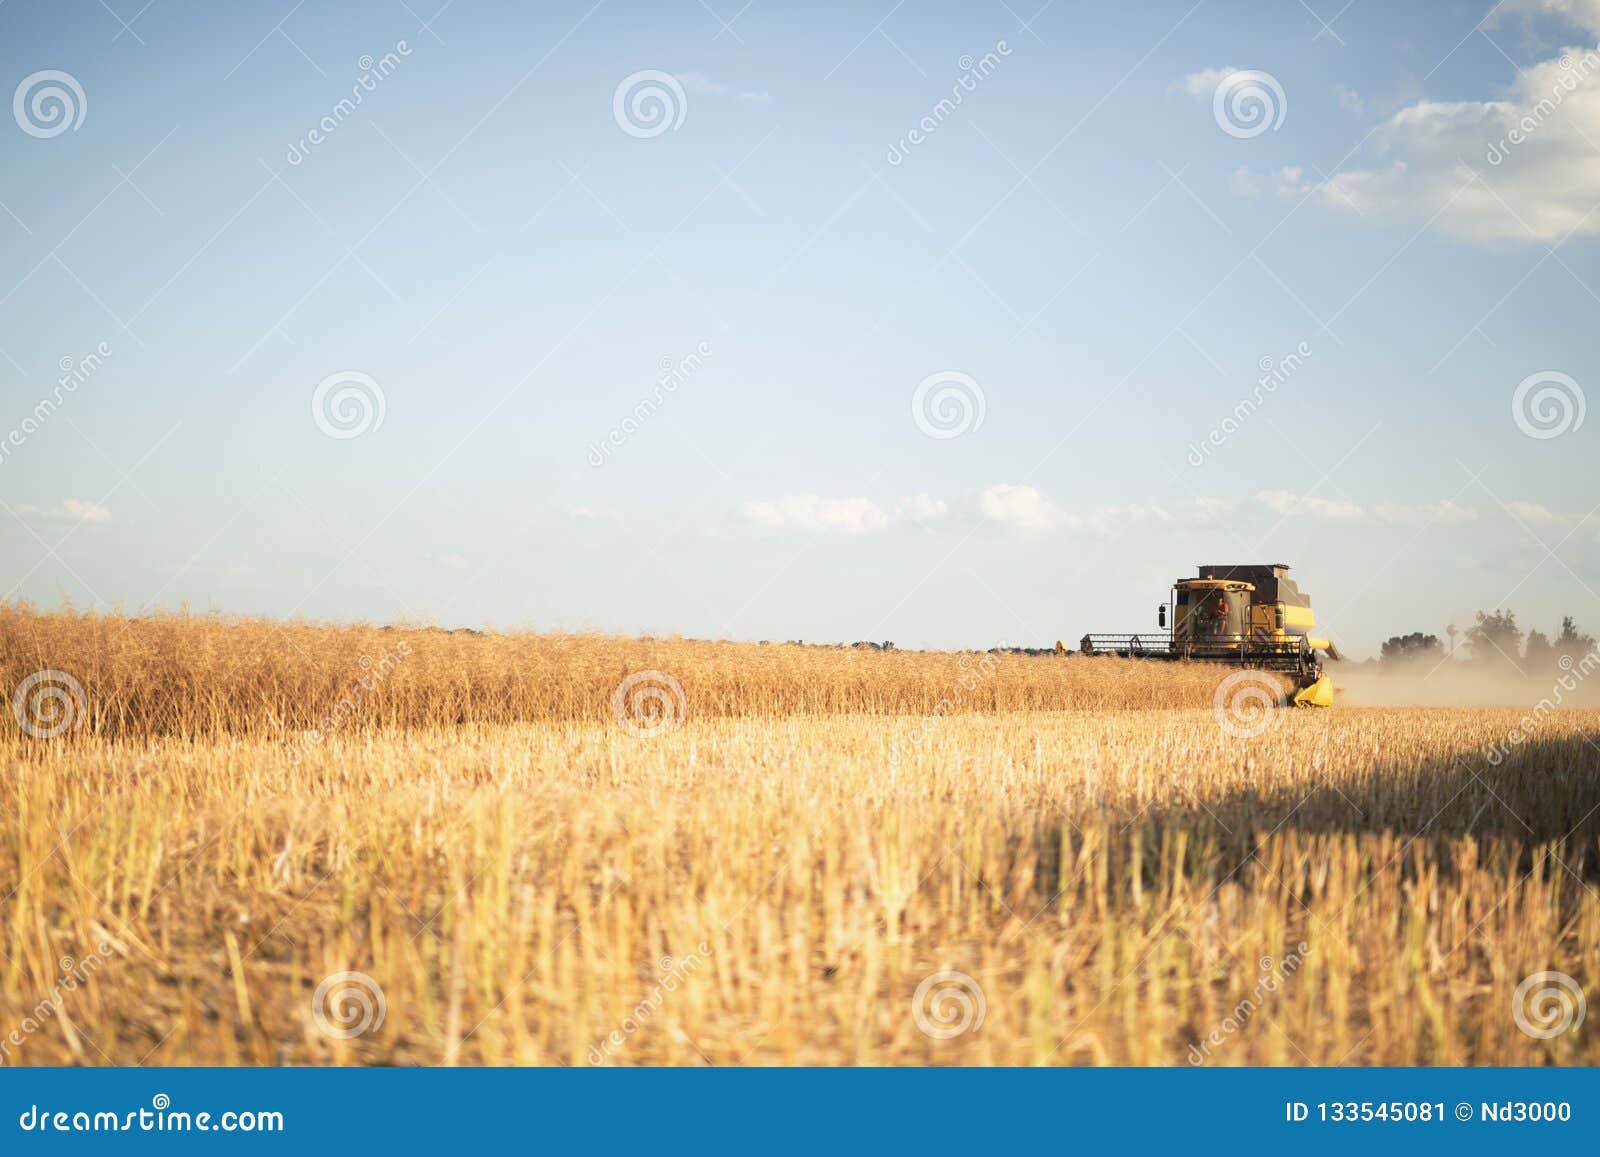 agricultura machine working in fields